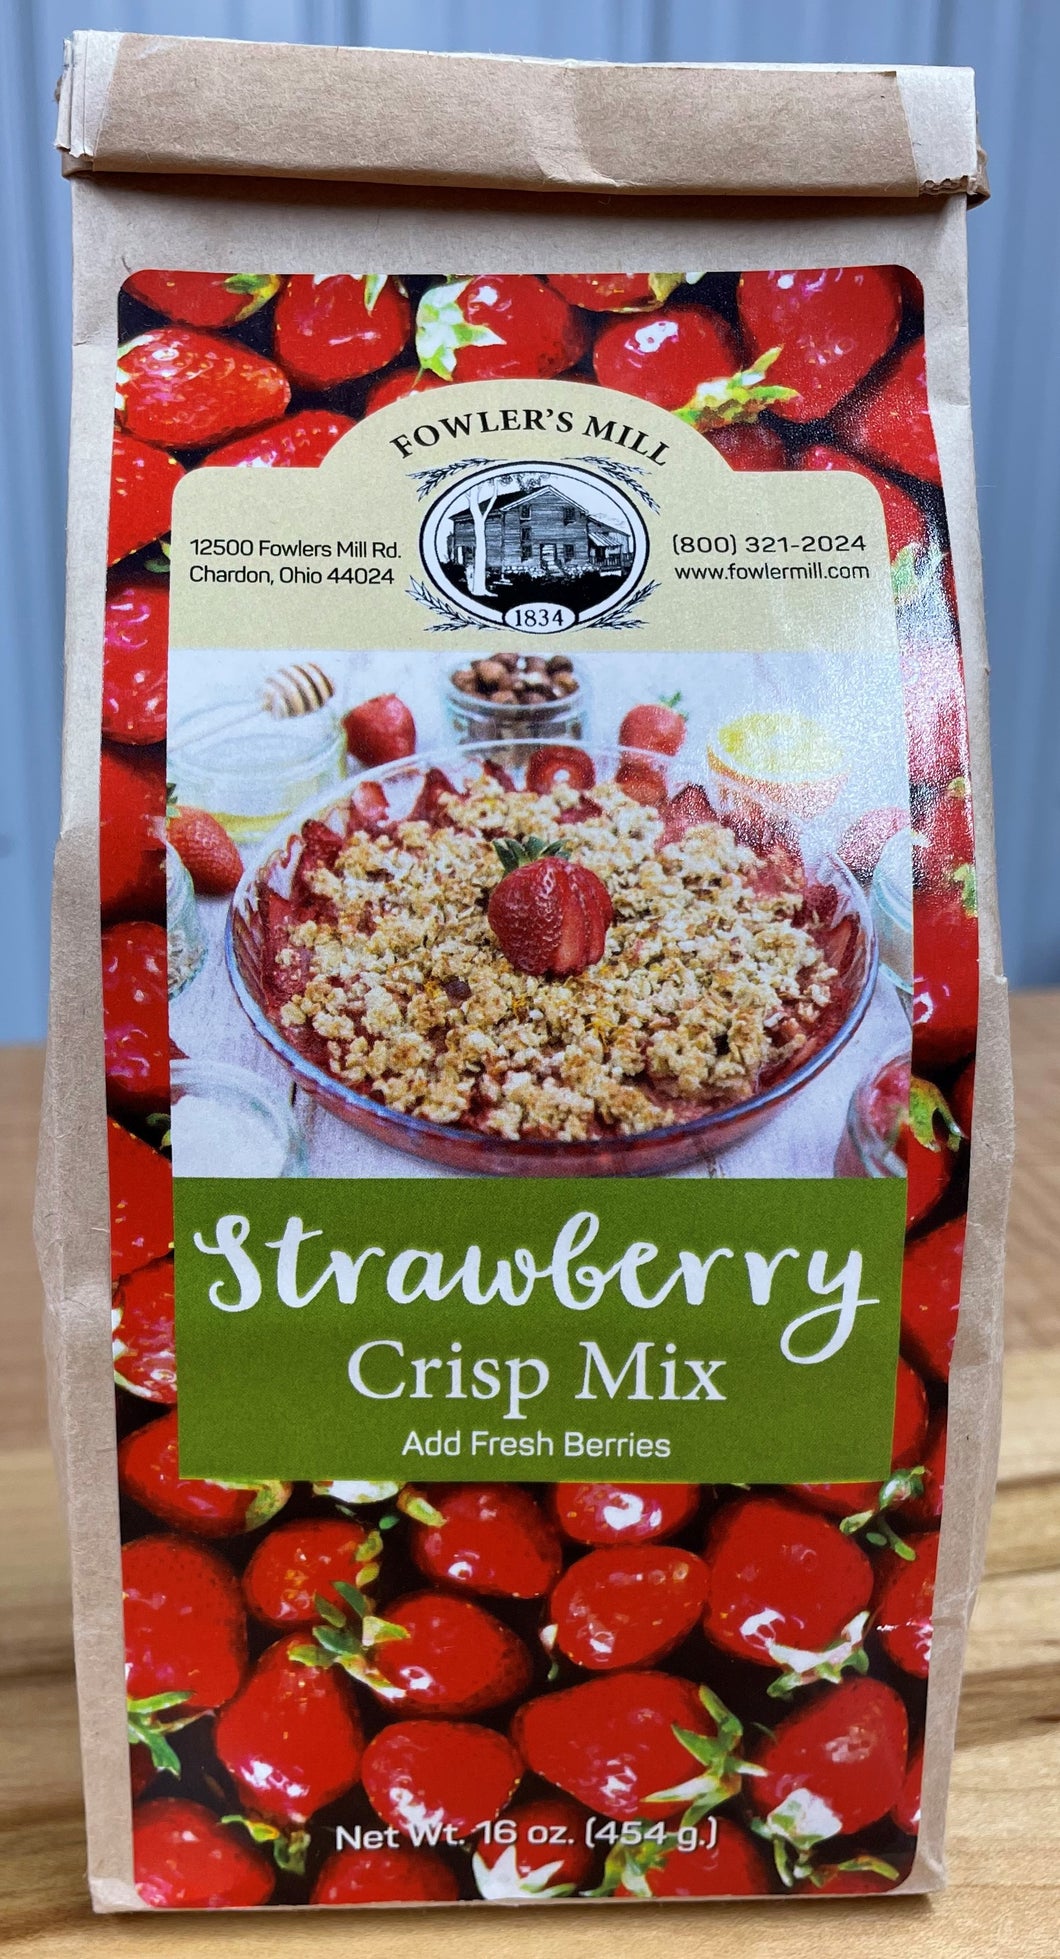 Fowler's Mill Strawberry Crisp Mix